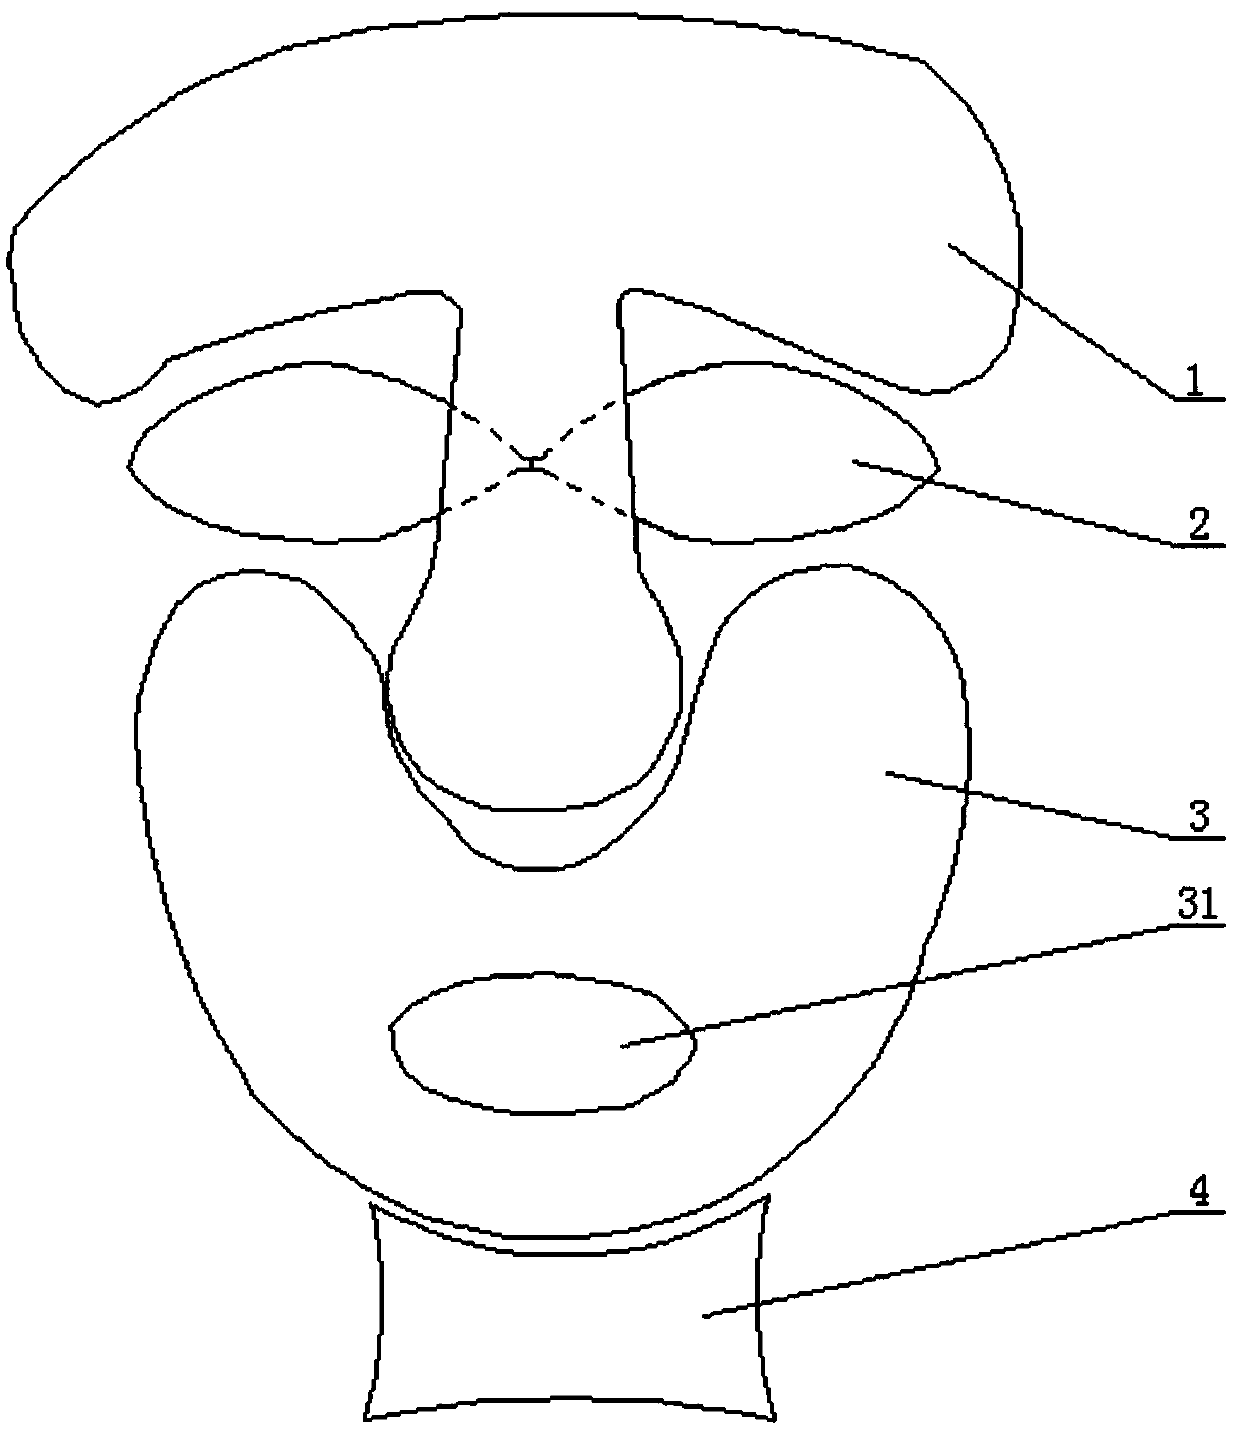 Split-type facial mask